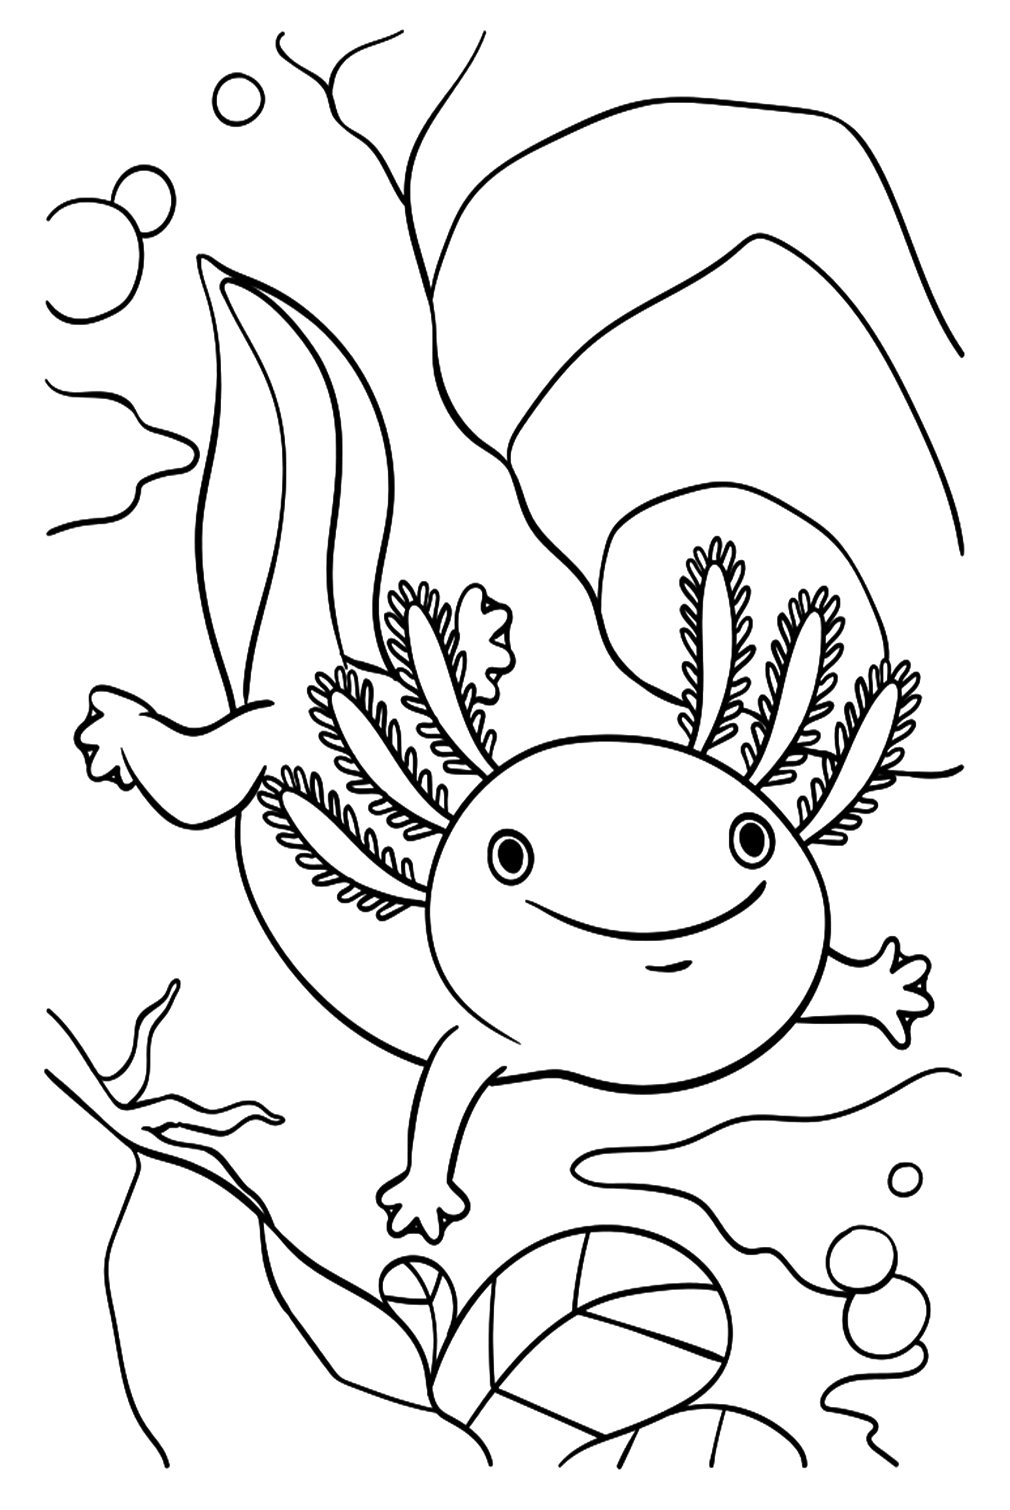 Printable Axolotl Coloring Pages